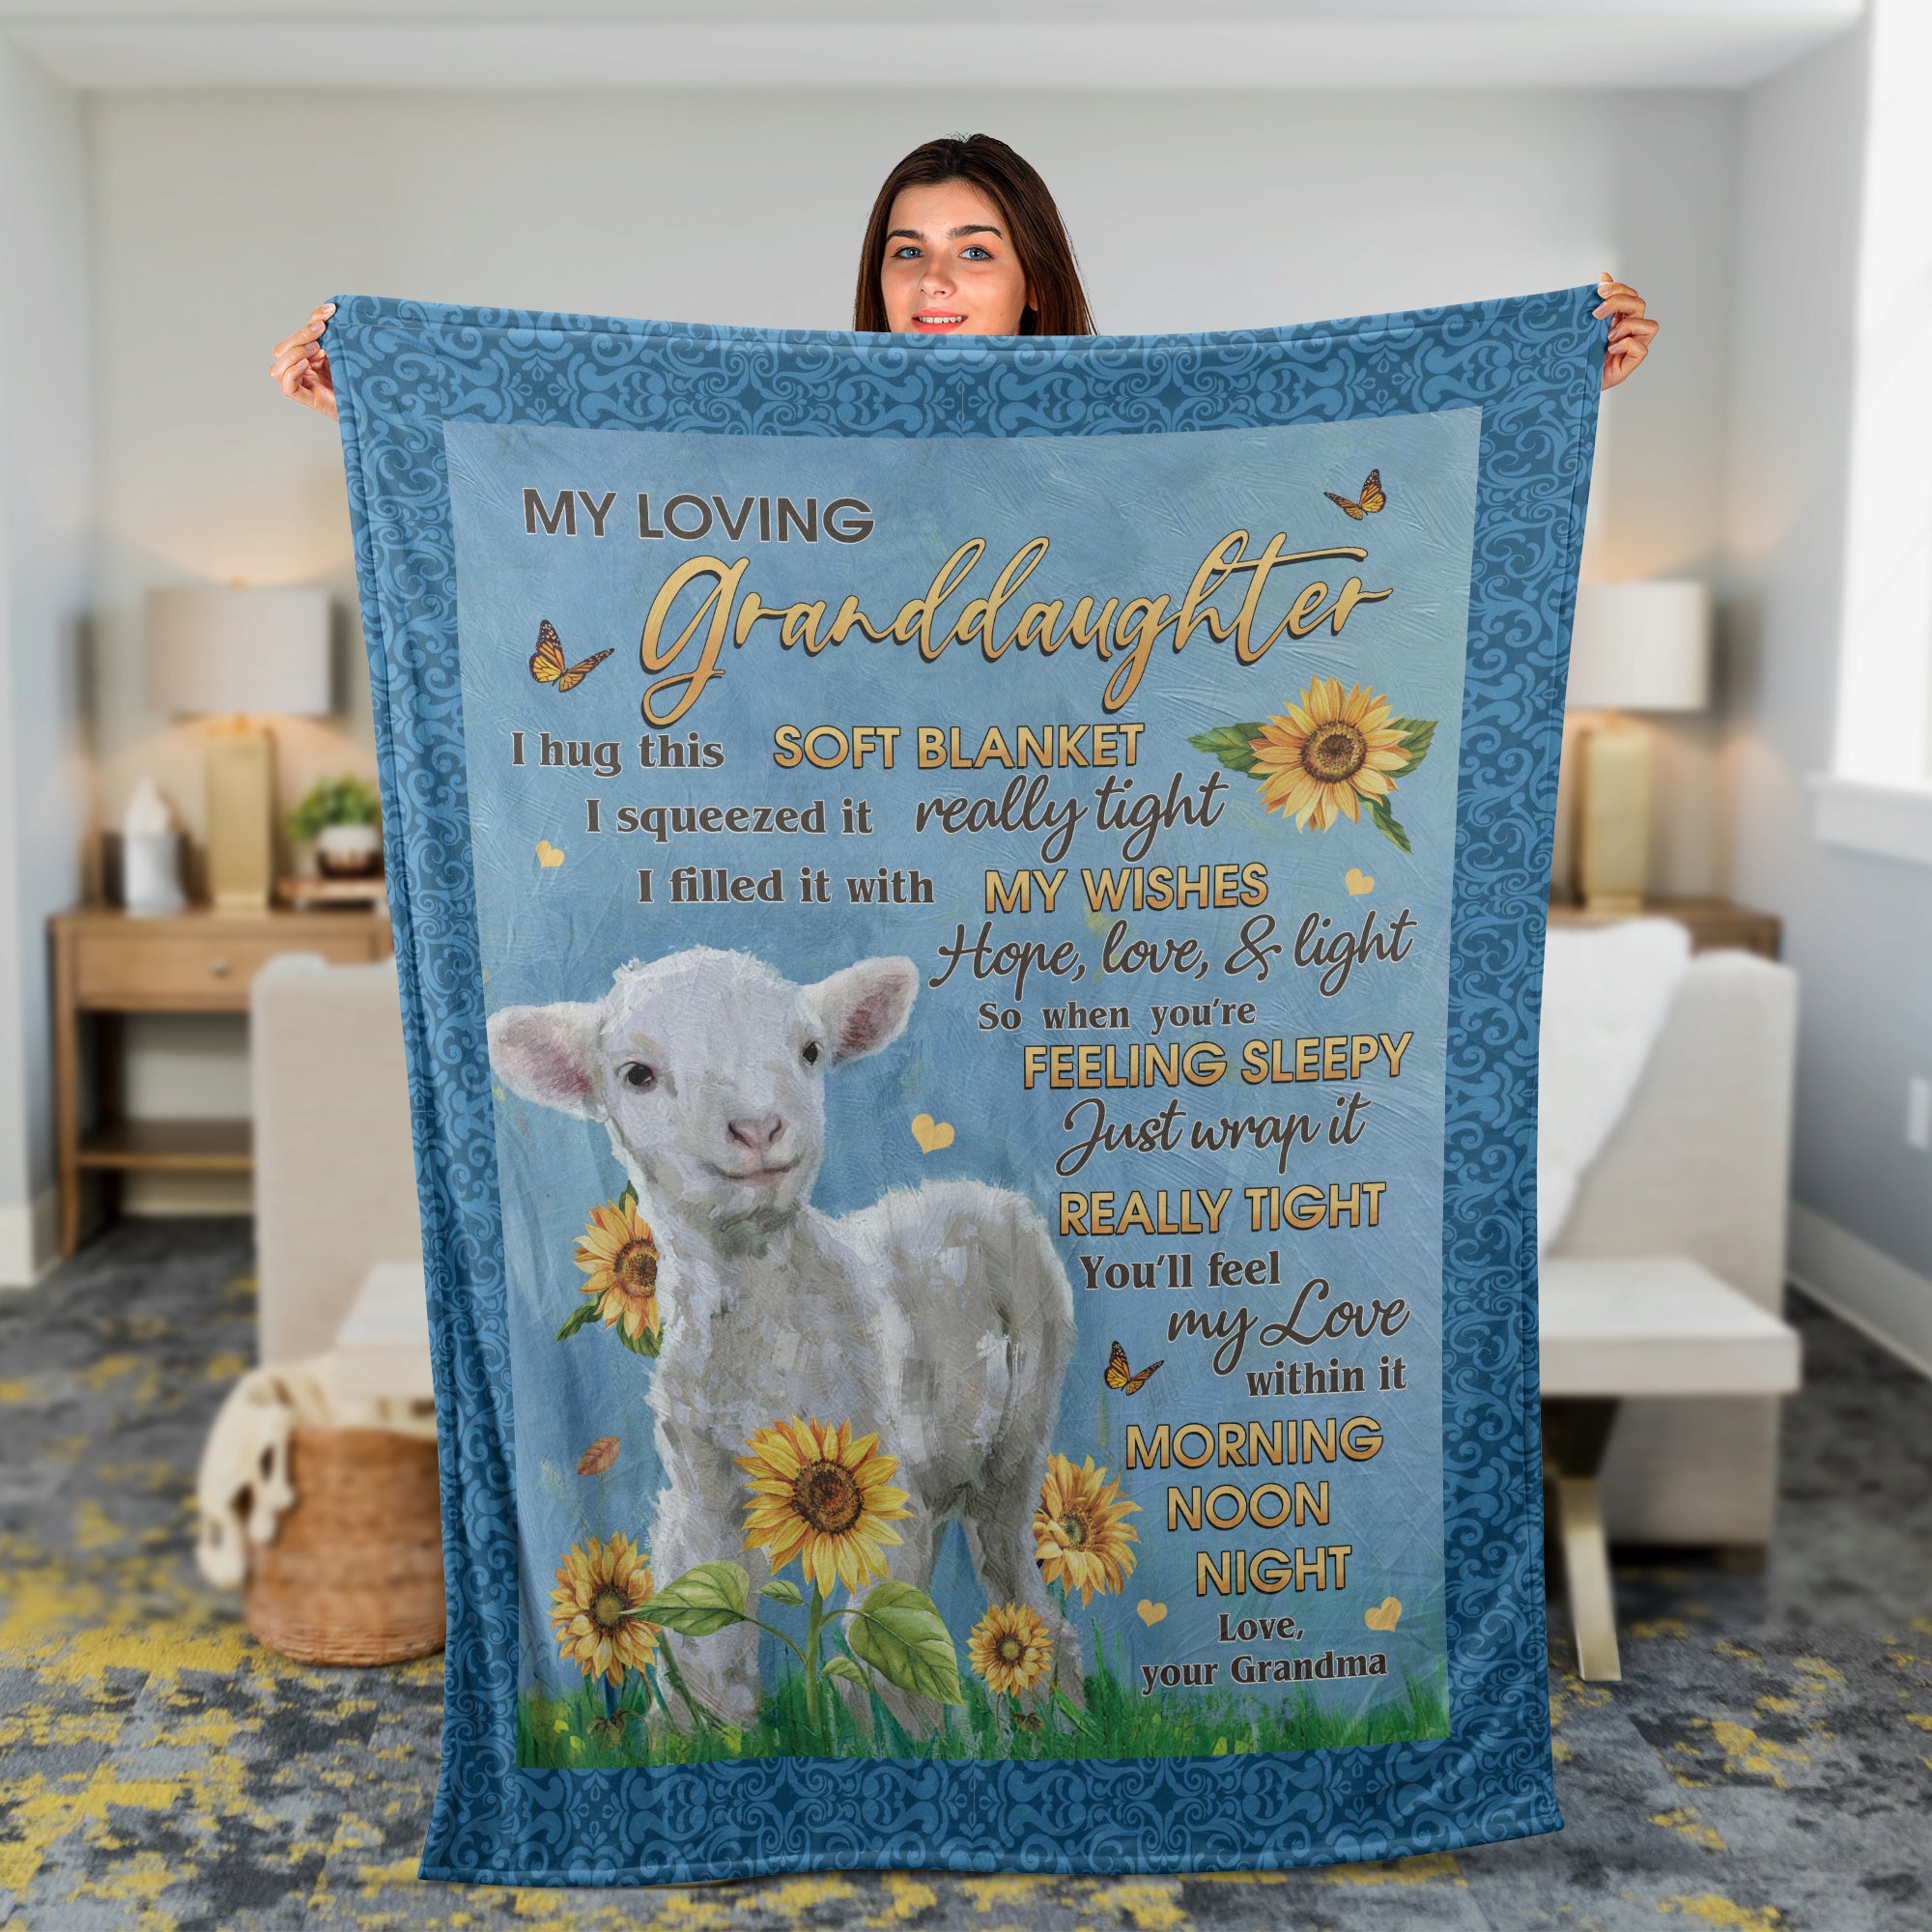 Granddaughter Blanket, Family Blanket, Perfect Gift For Granddaughter From Grandma, Grandpa - Lamb And Sunflower Field, Hope Love And Light